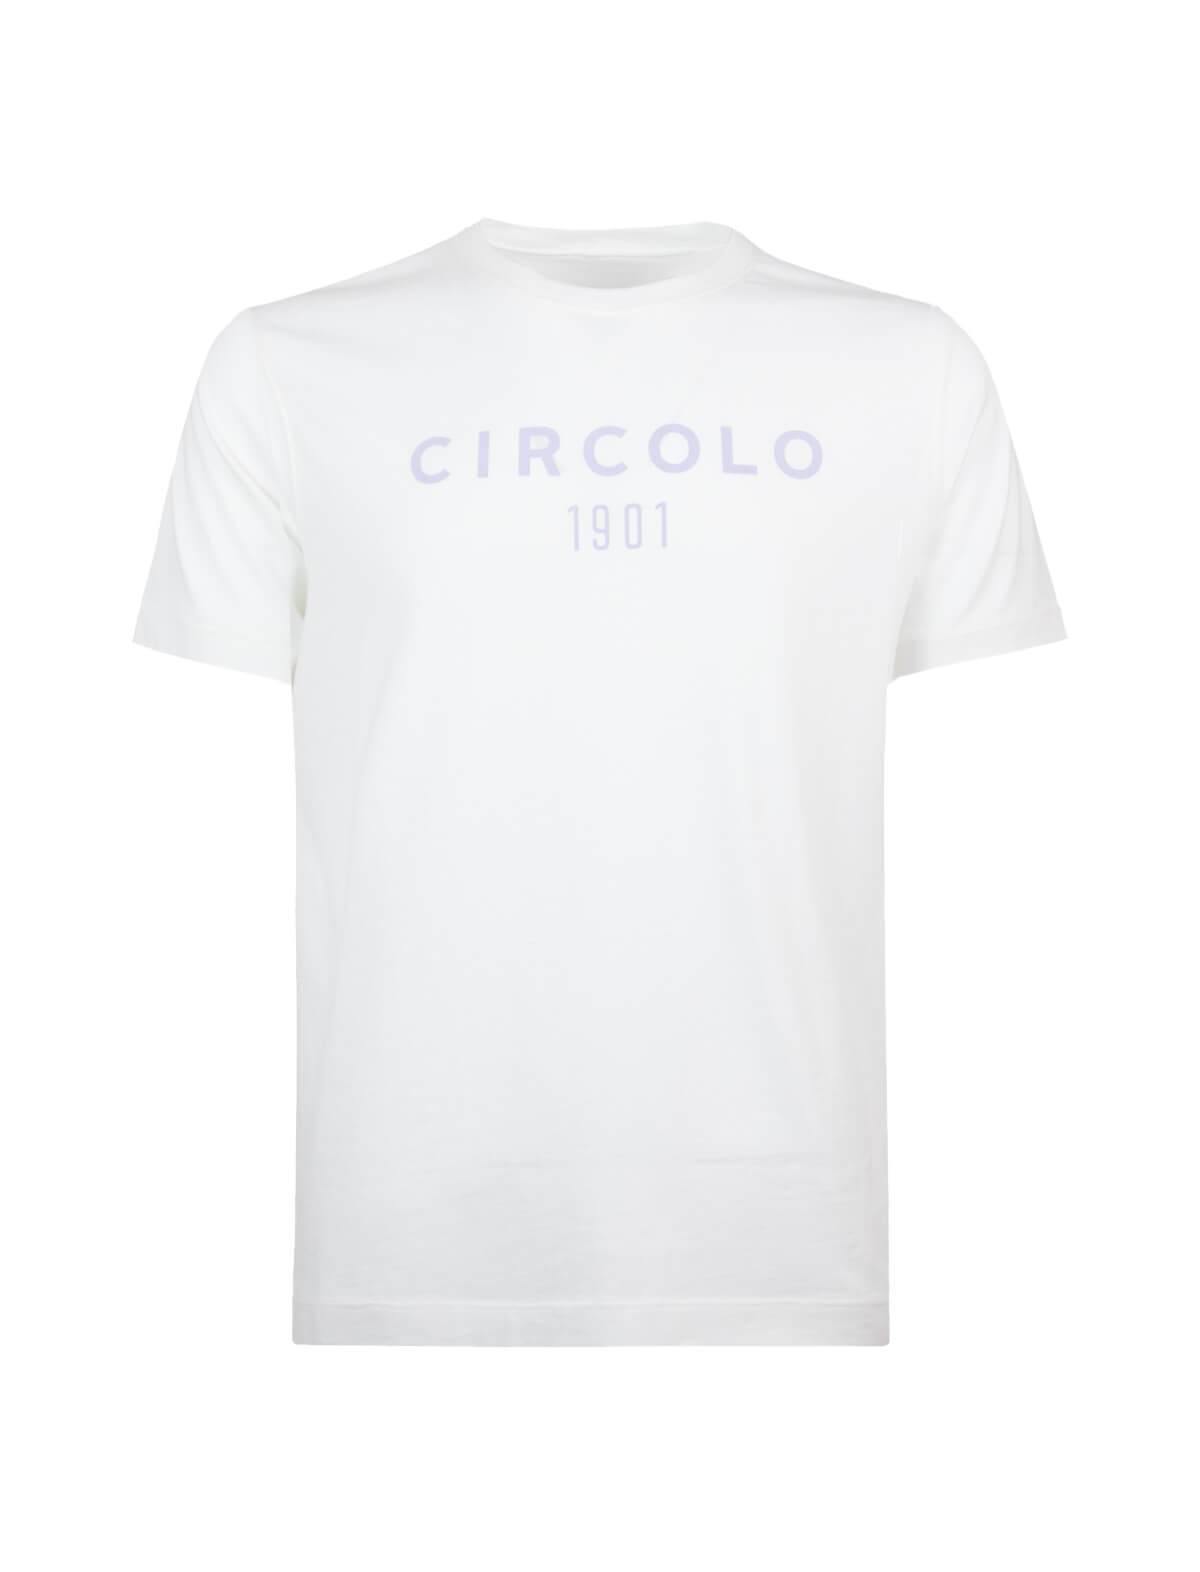 CIRCOLO 1901 Logo Cotton Jersey T-shirt in White/ Lilac | CLOSET Singapore